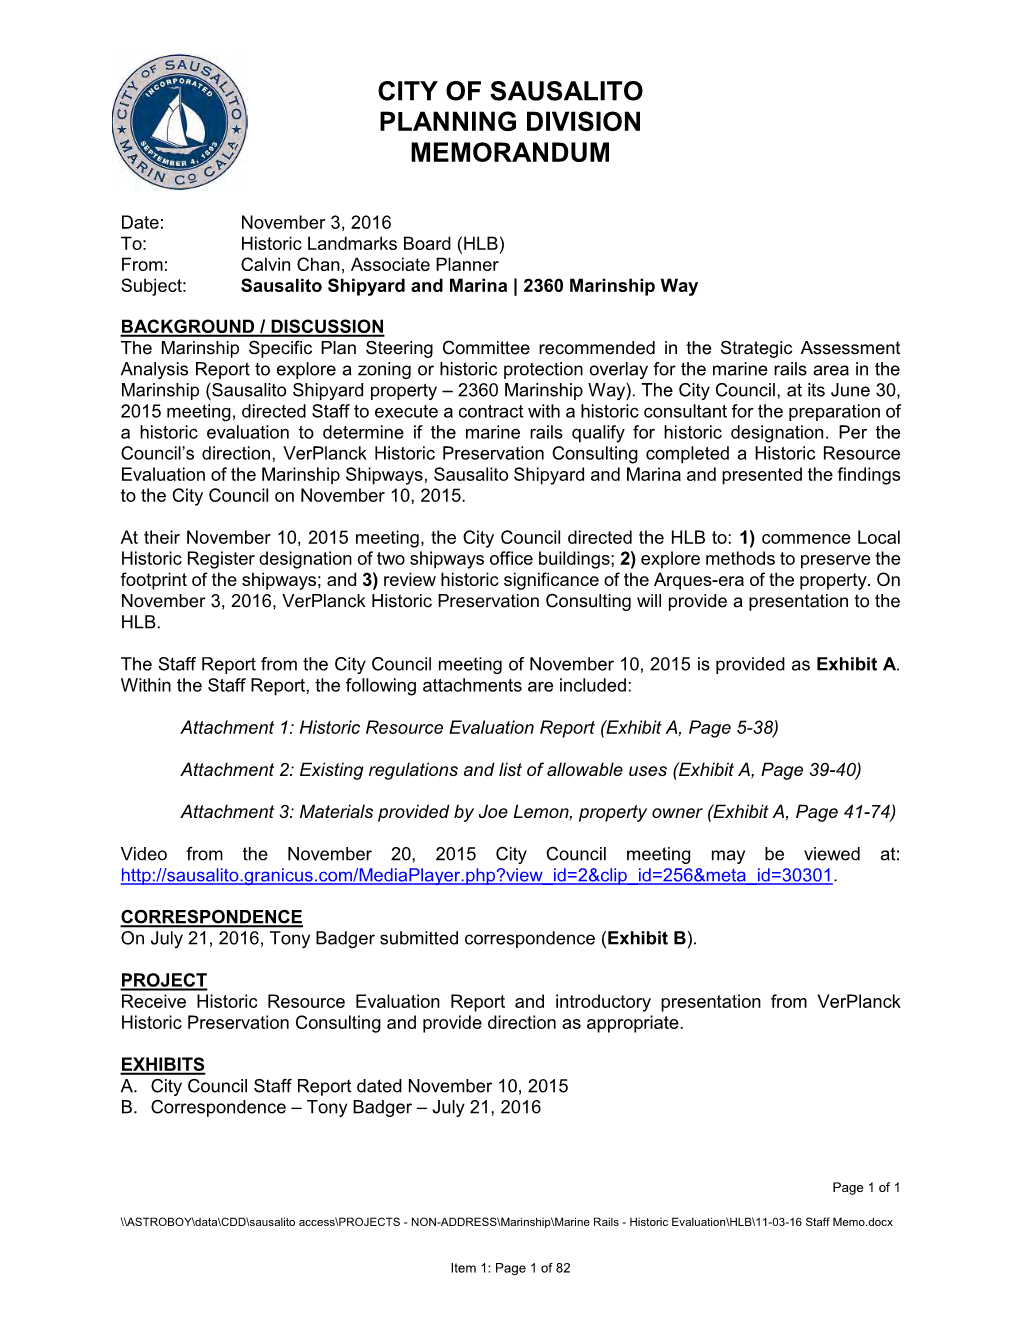 City of Sausalito Planning Division Memorandum